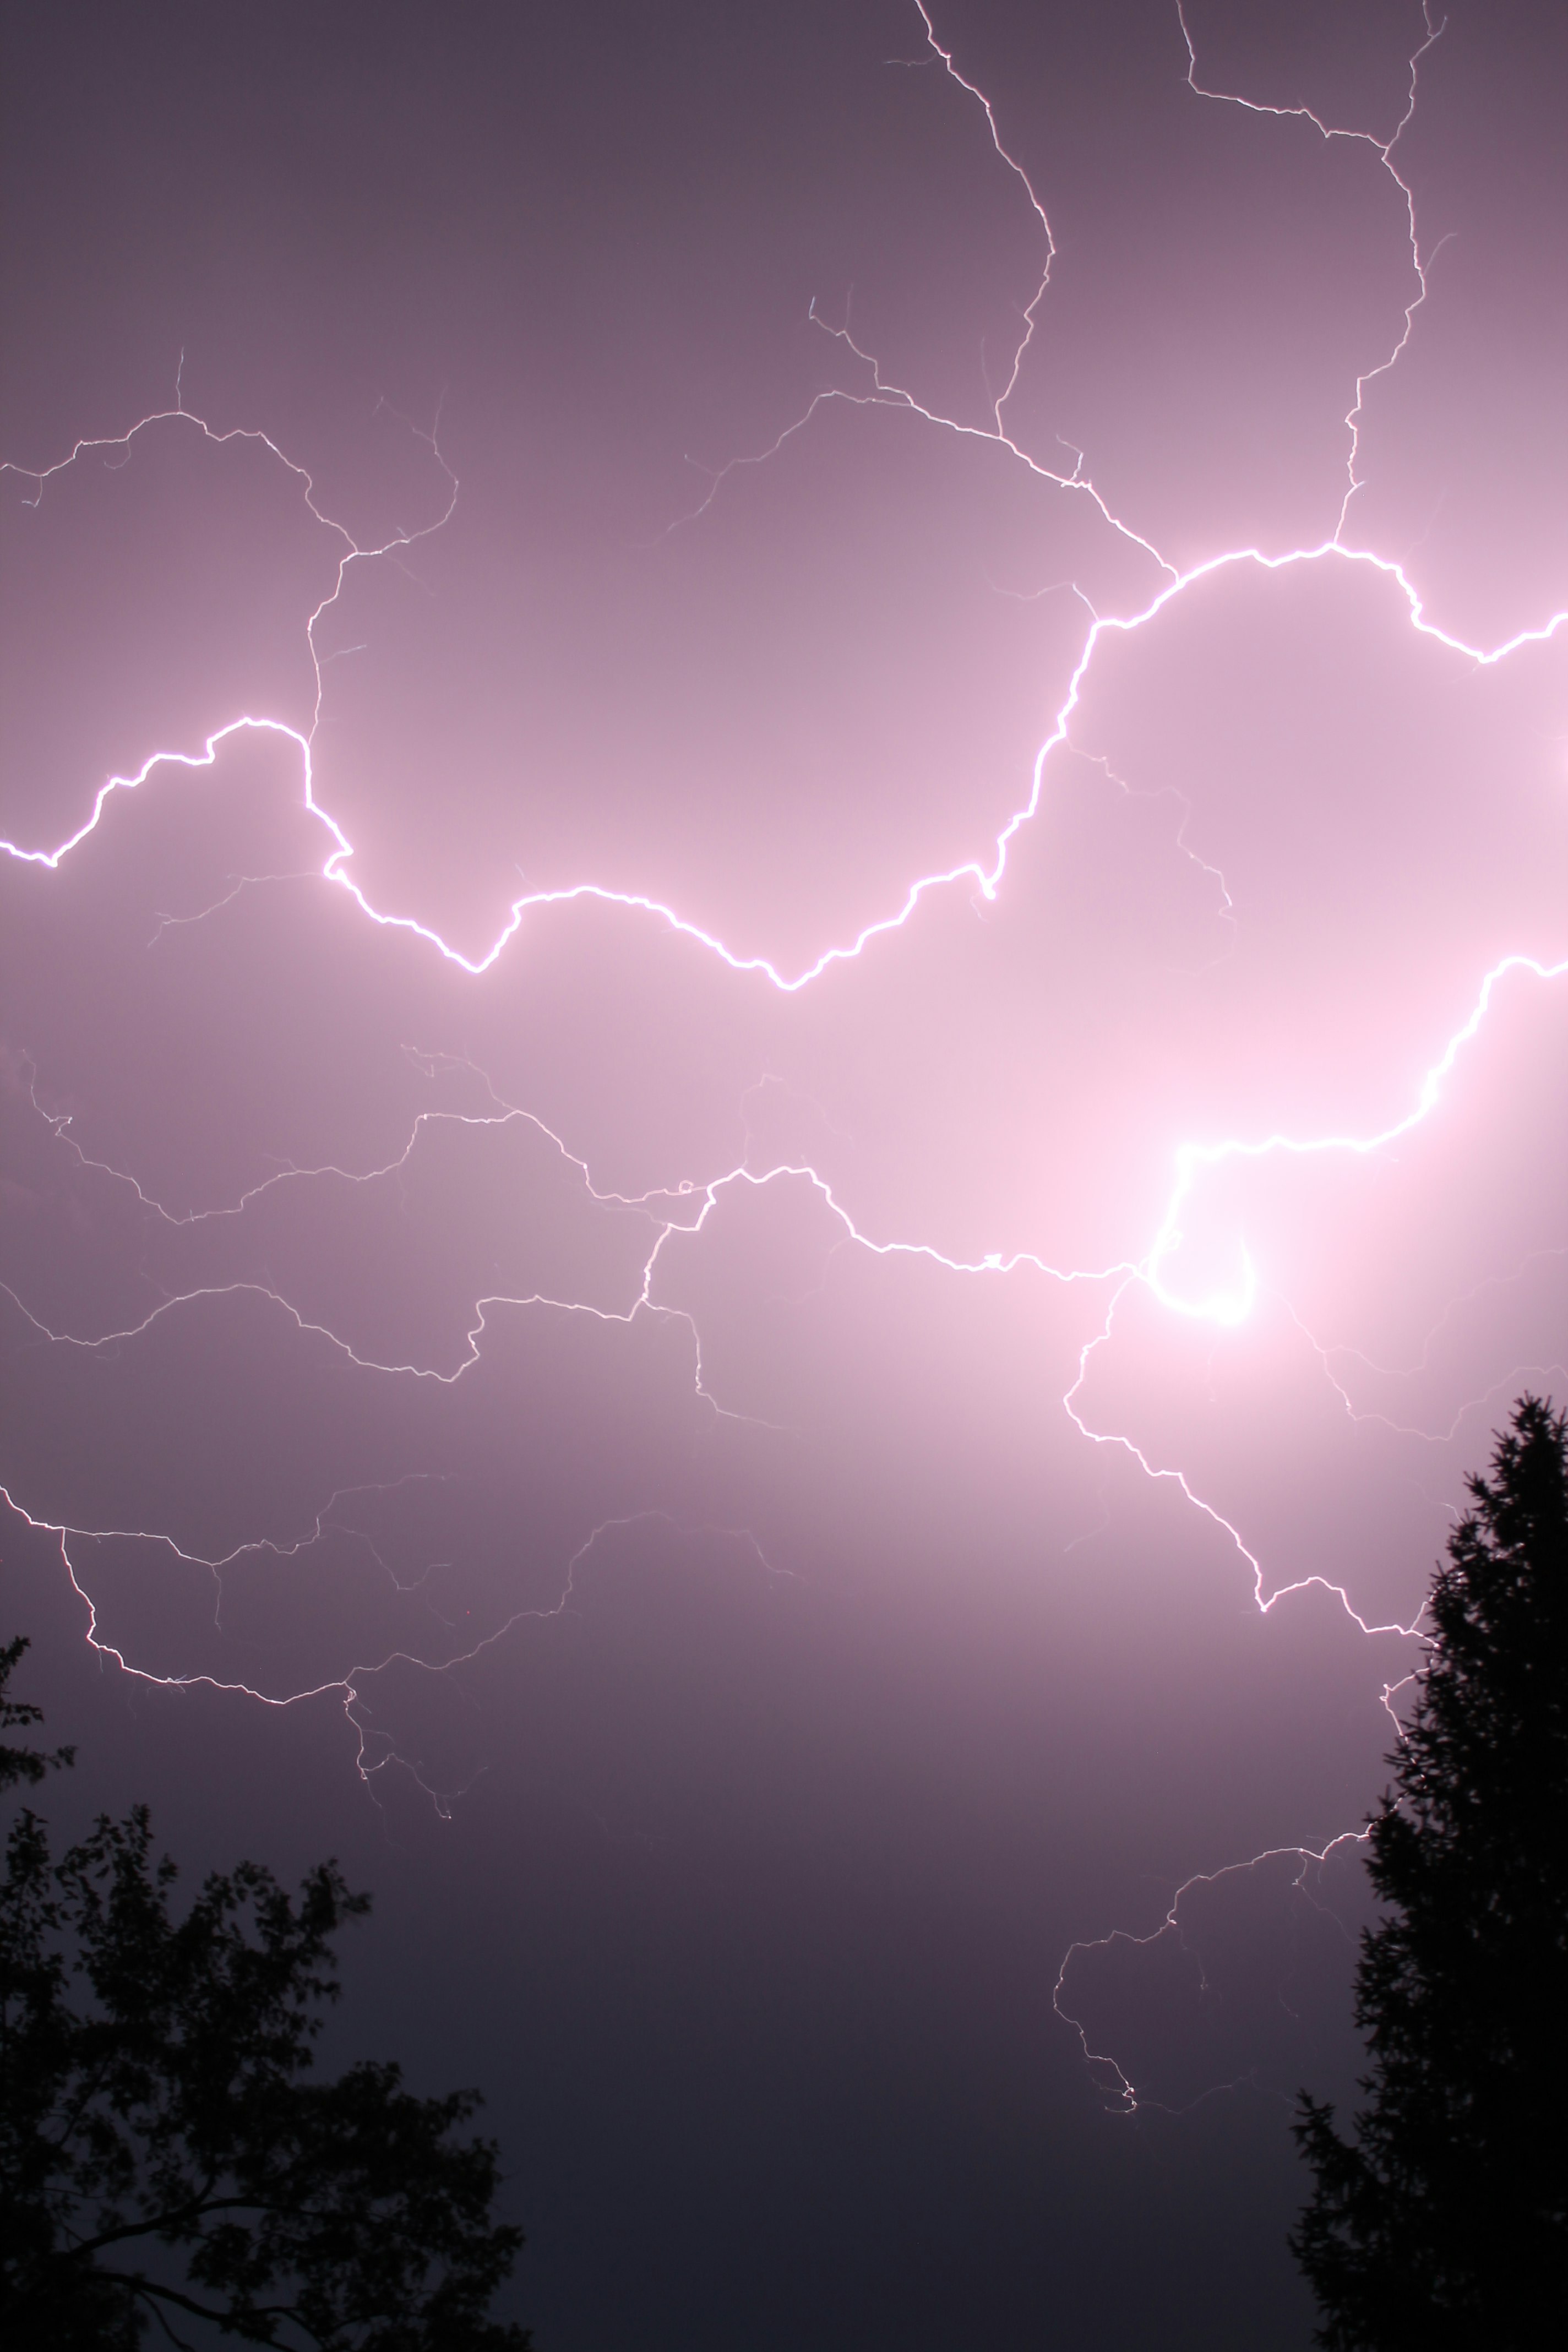 lightning strike on trees during night time